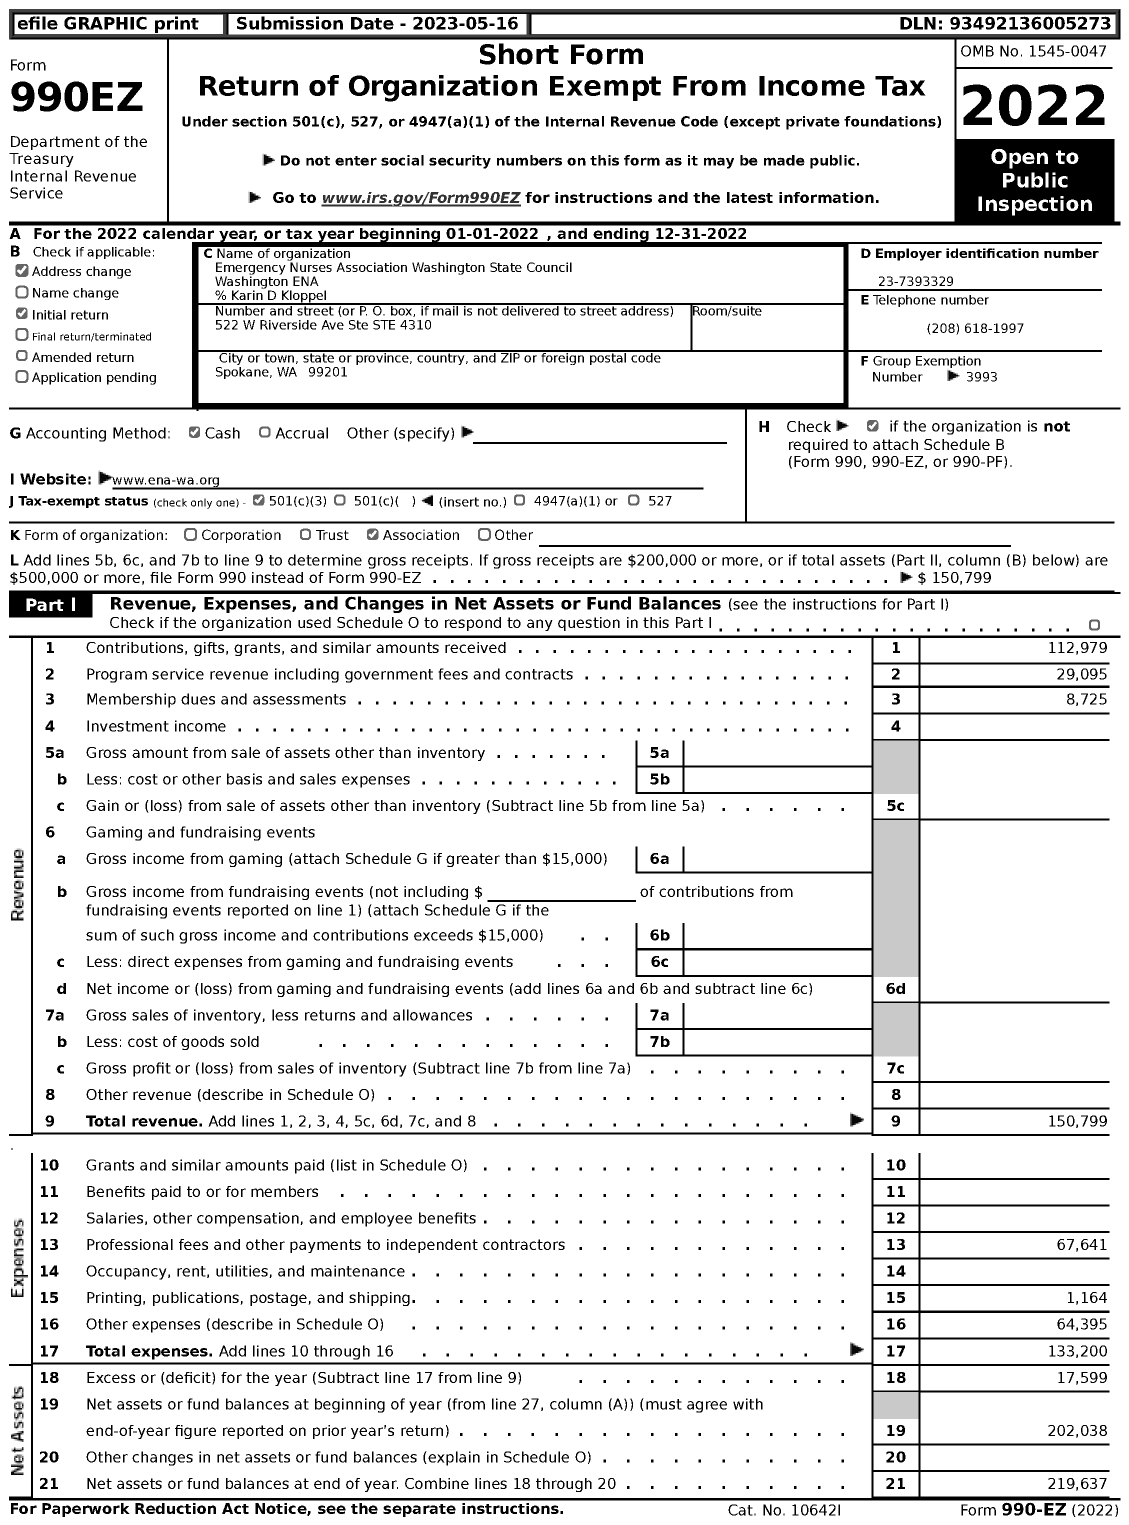 Image of first page of 2022 Form 990EZ for Emergency Nurses Association Washington State Council Washington ENA